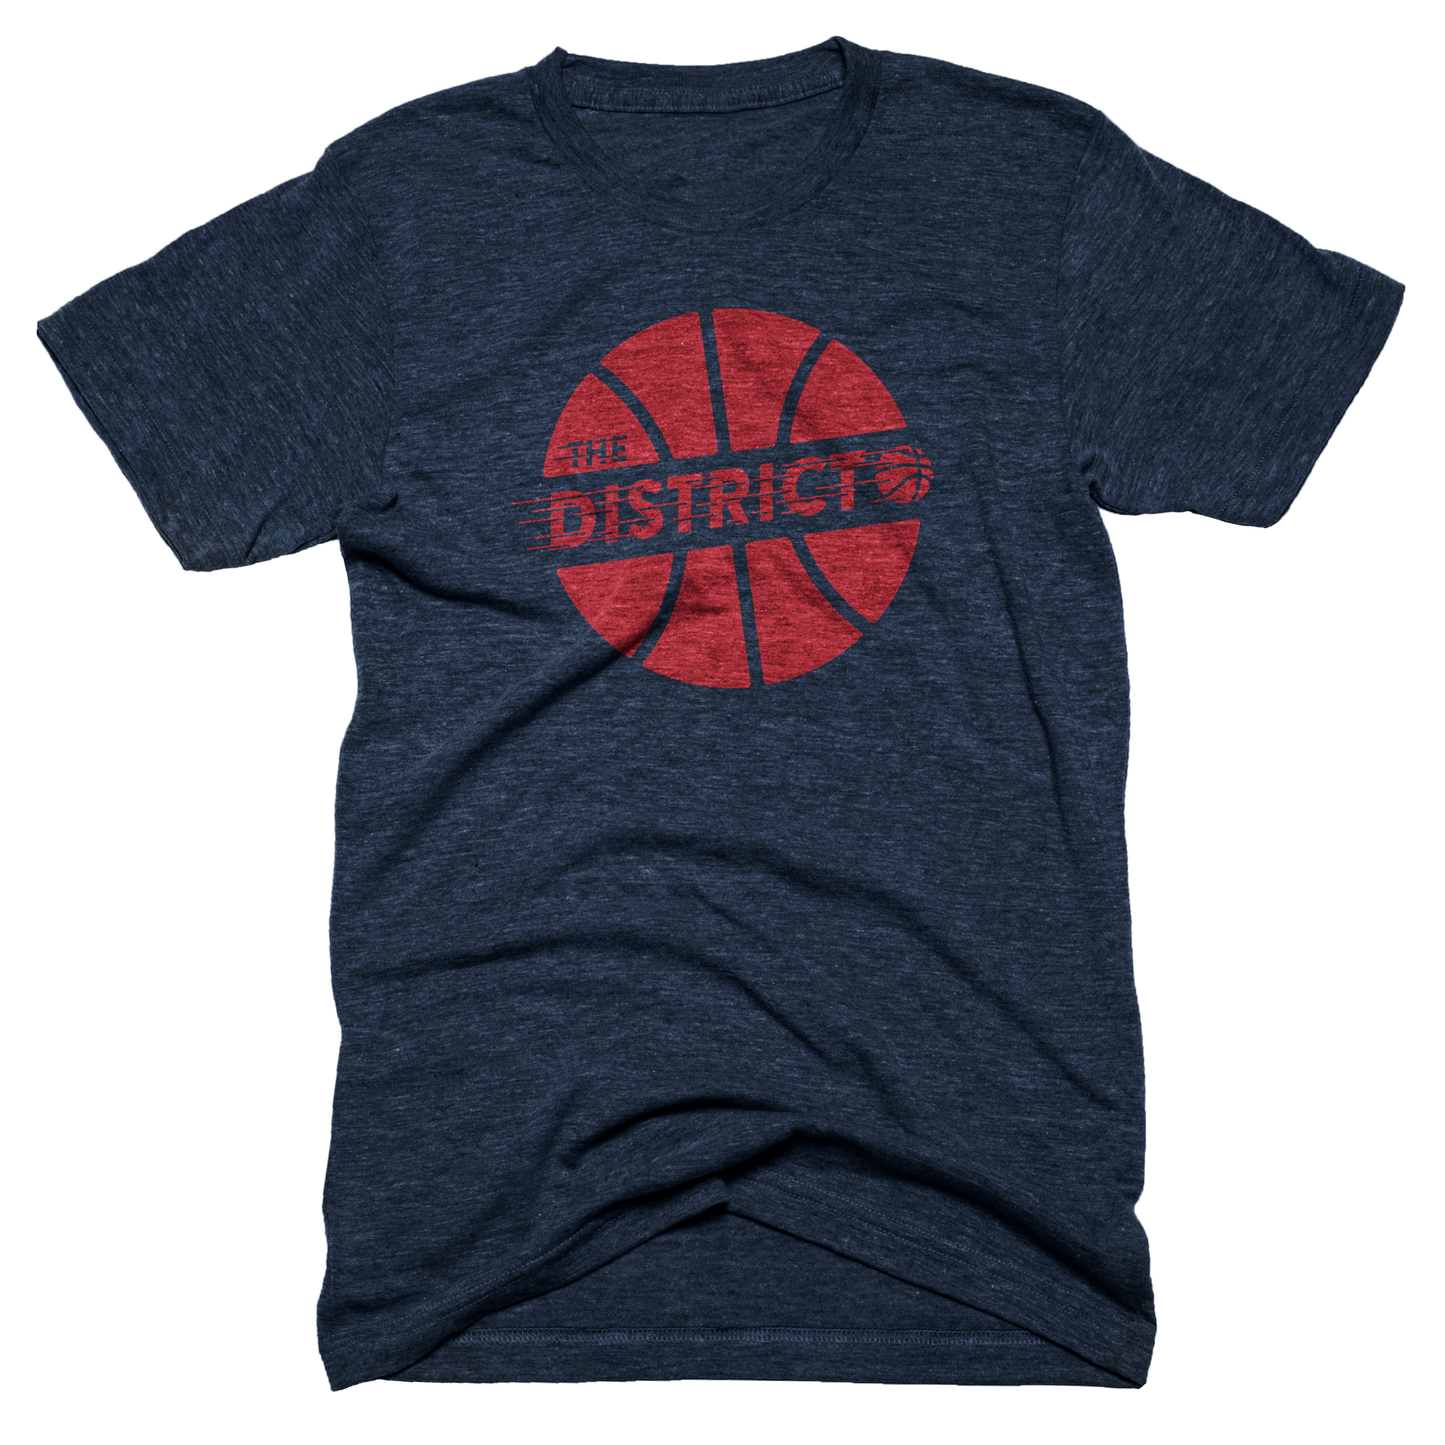 The District Basketball Tee T-shirt